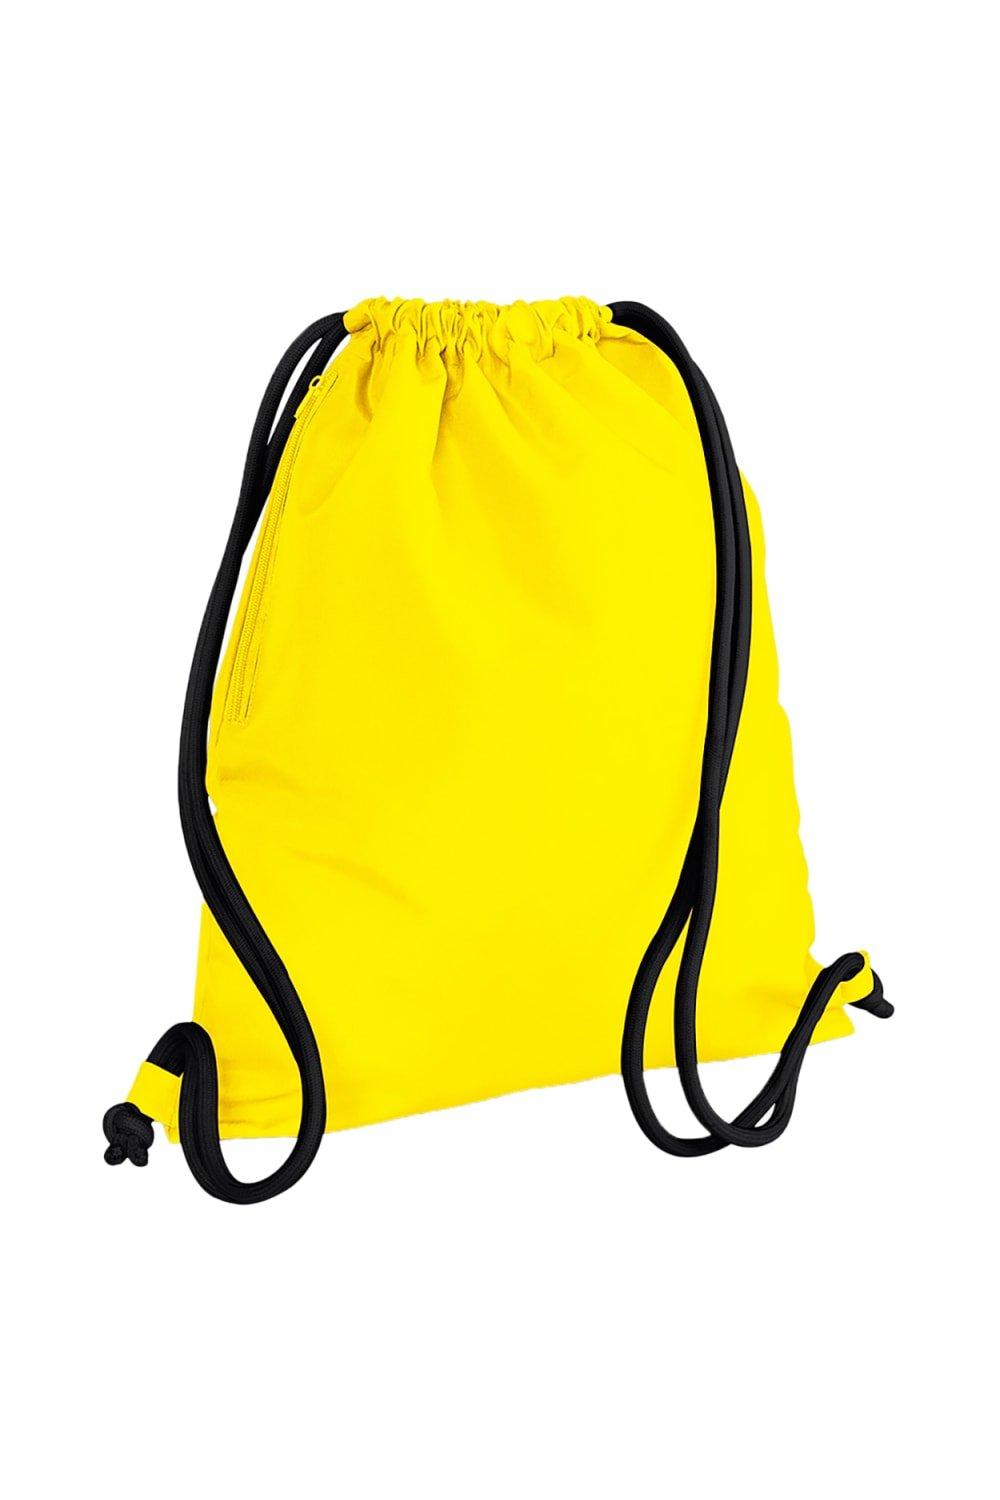 Сумка Icon на шнурке / Gymsac Bagbase, желтый сумка urban gymsac на шнурке sol s синий